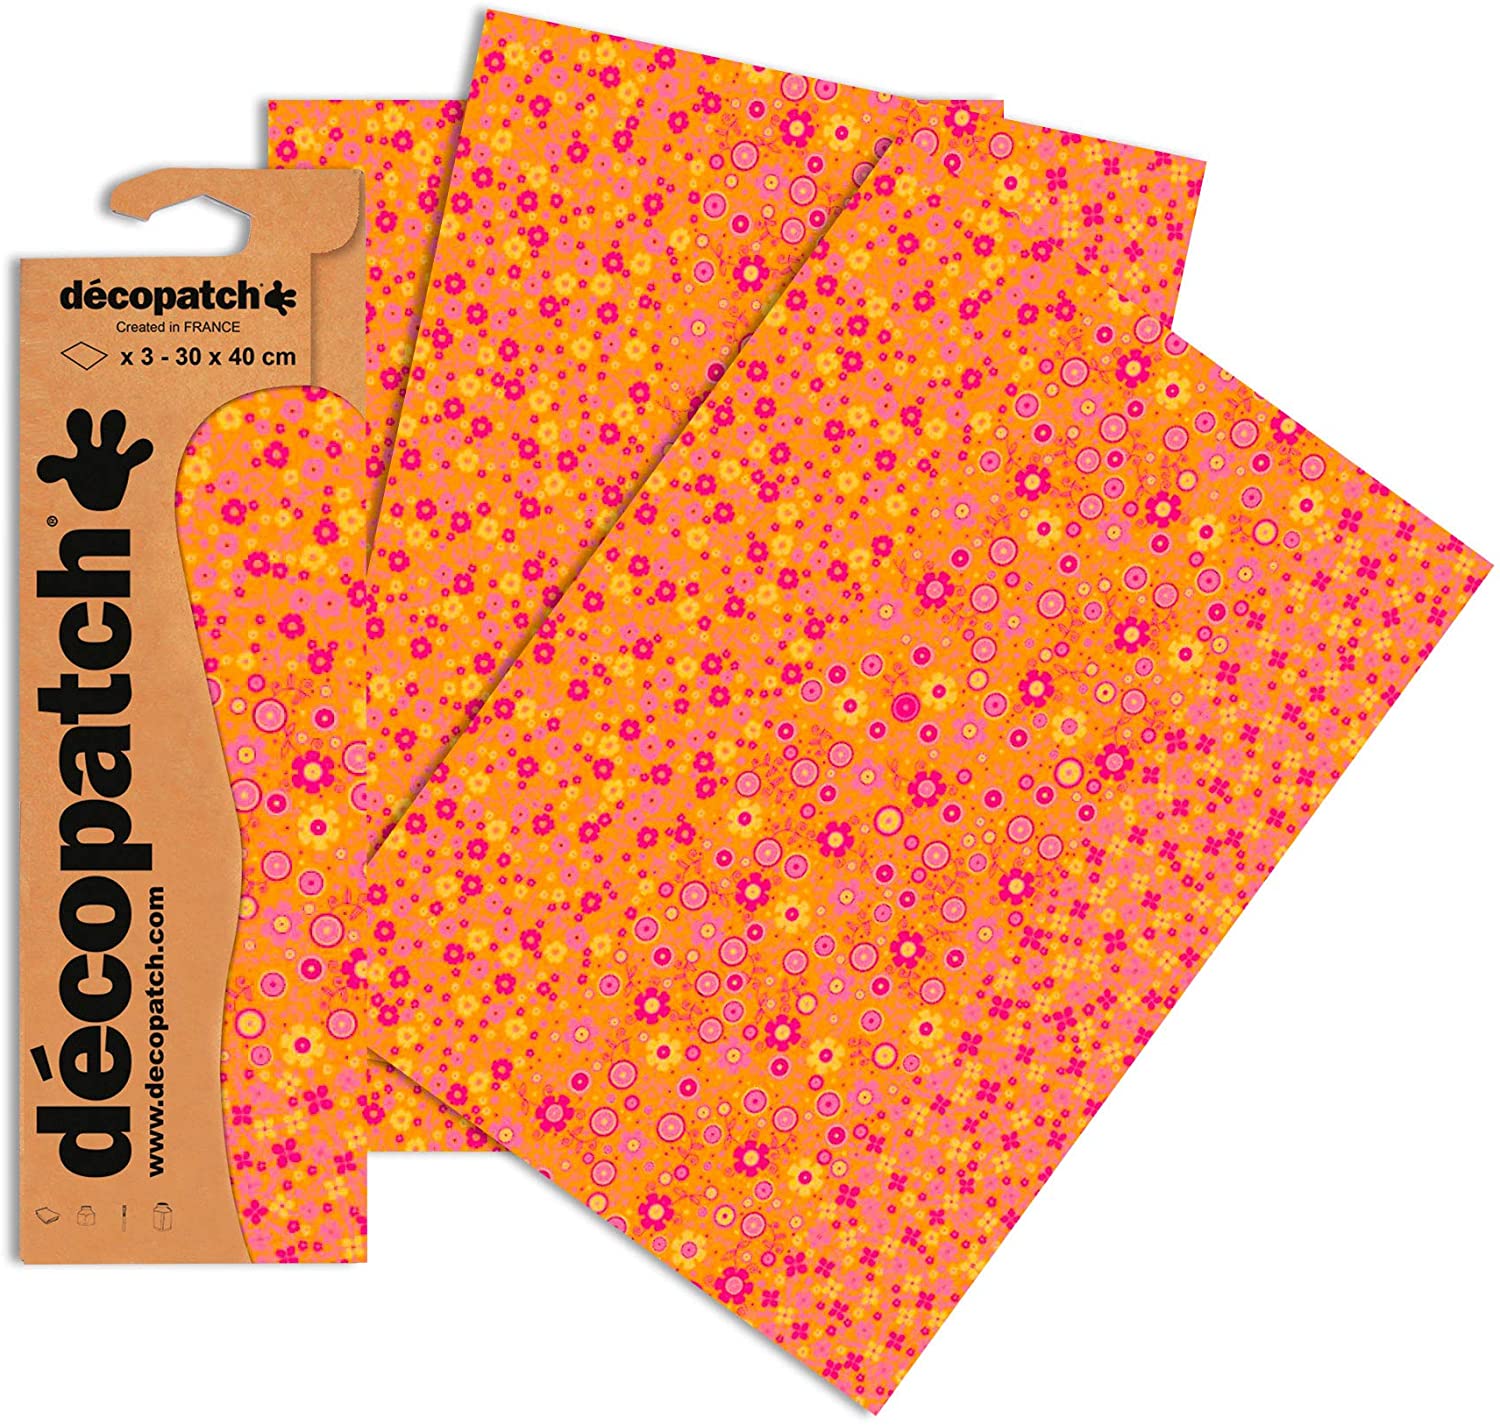 Orange Decopatch paper – Amazon